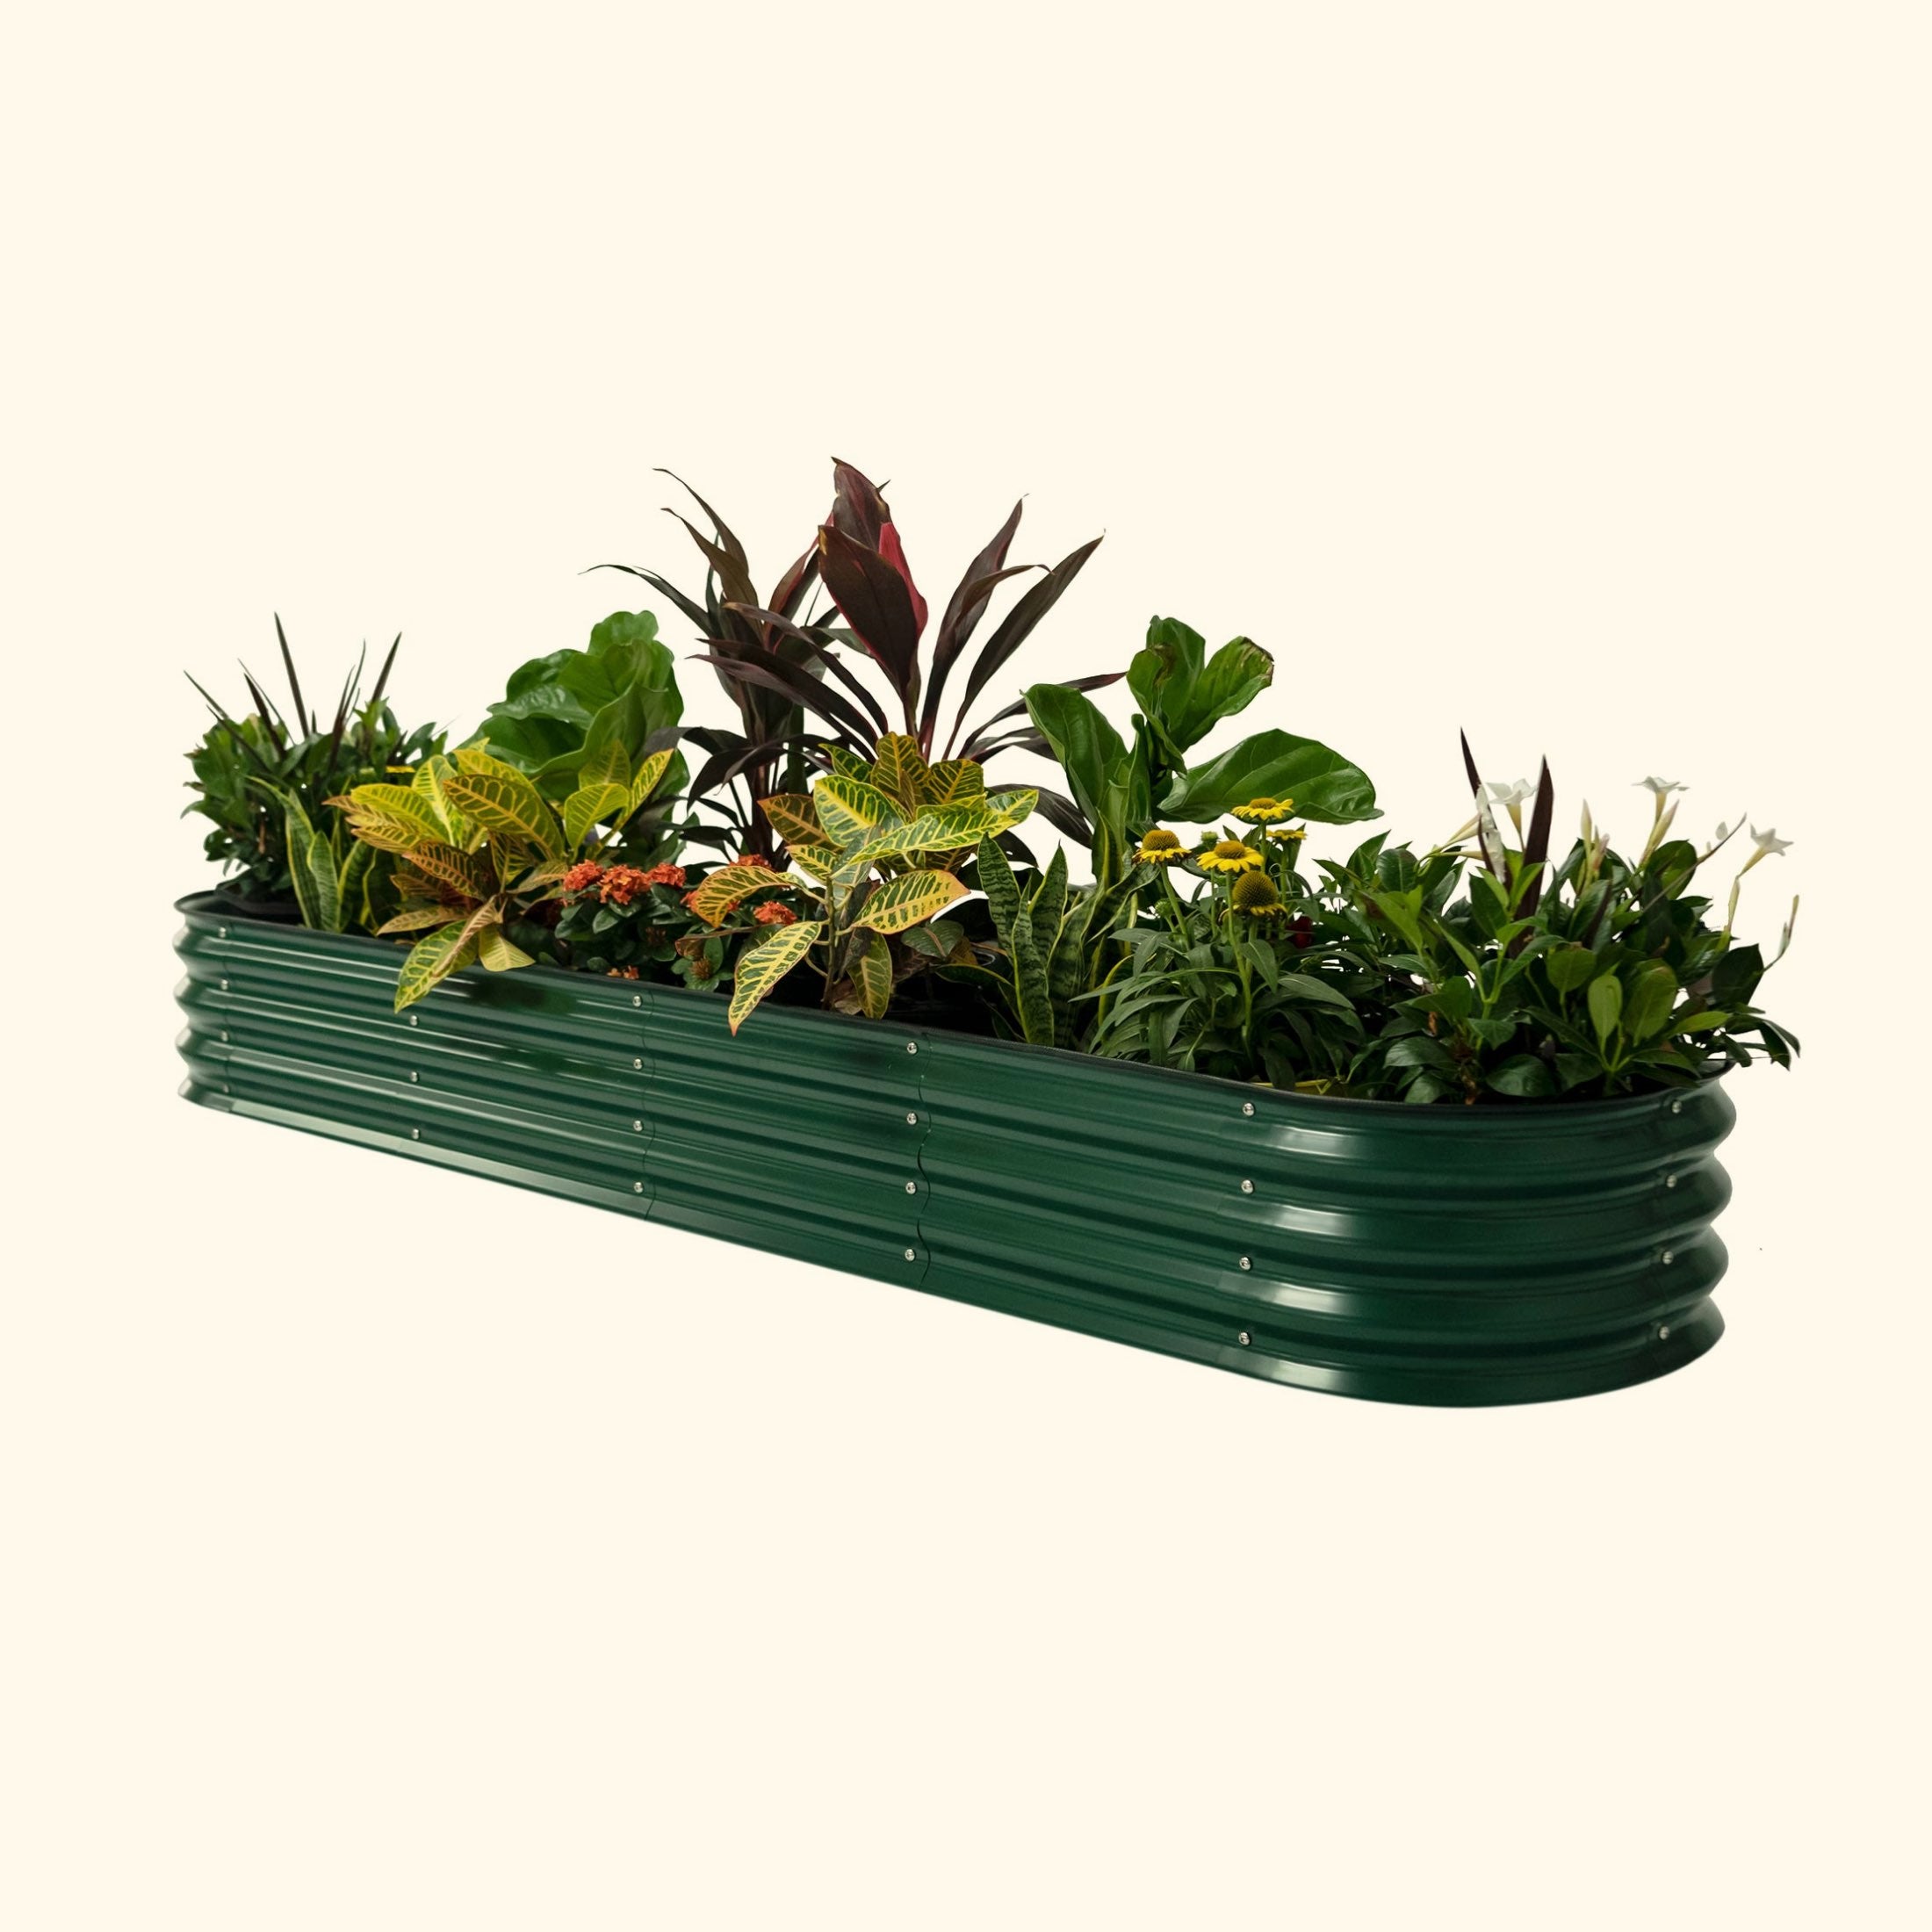 Vego Graden | 11" Tall 9 In 1 Modular Metal Raised Garden Bed Kit British Green